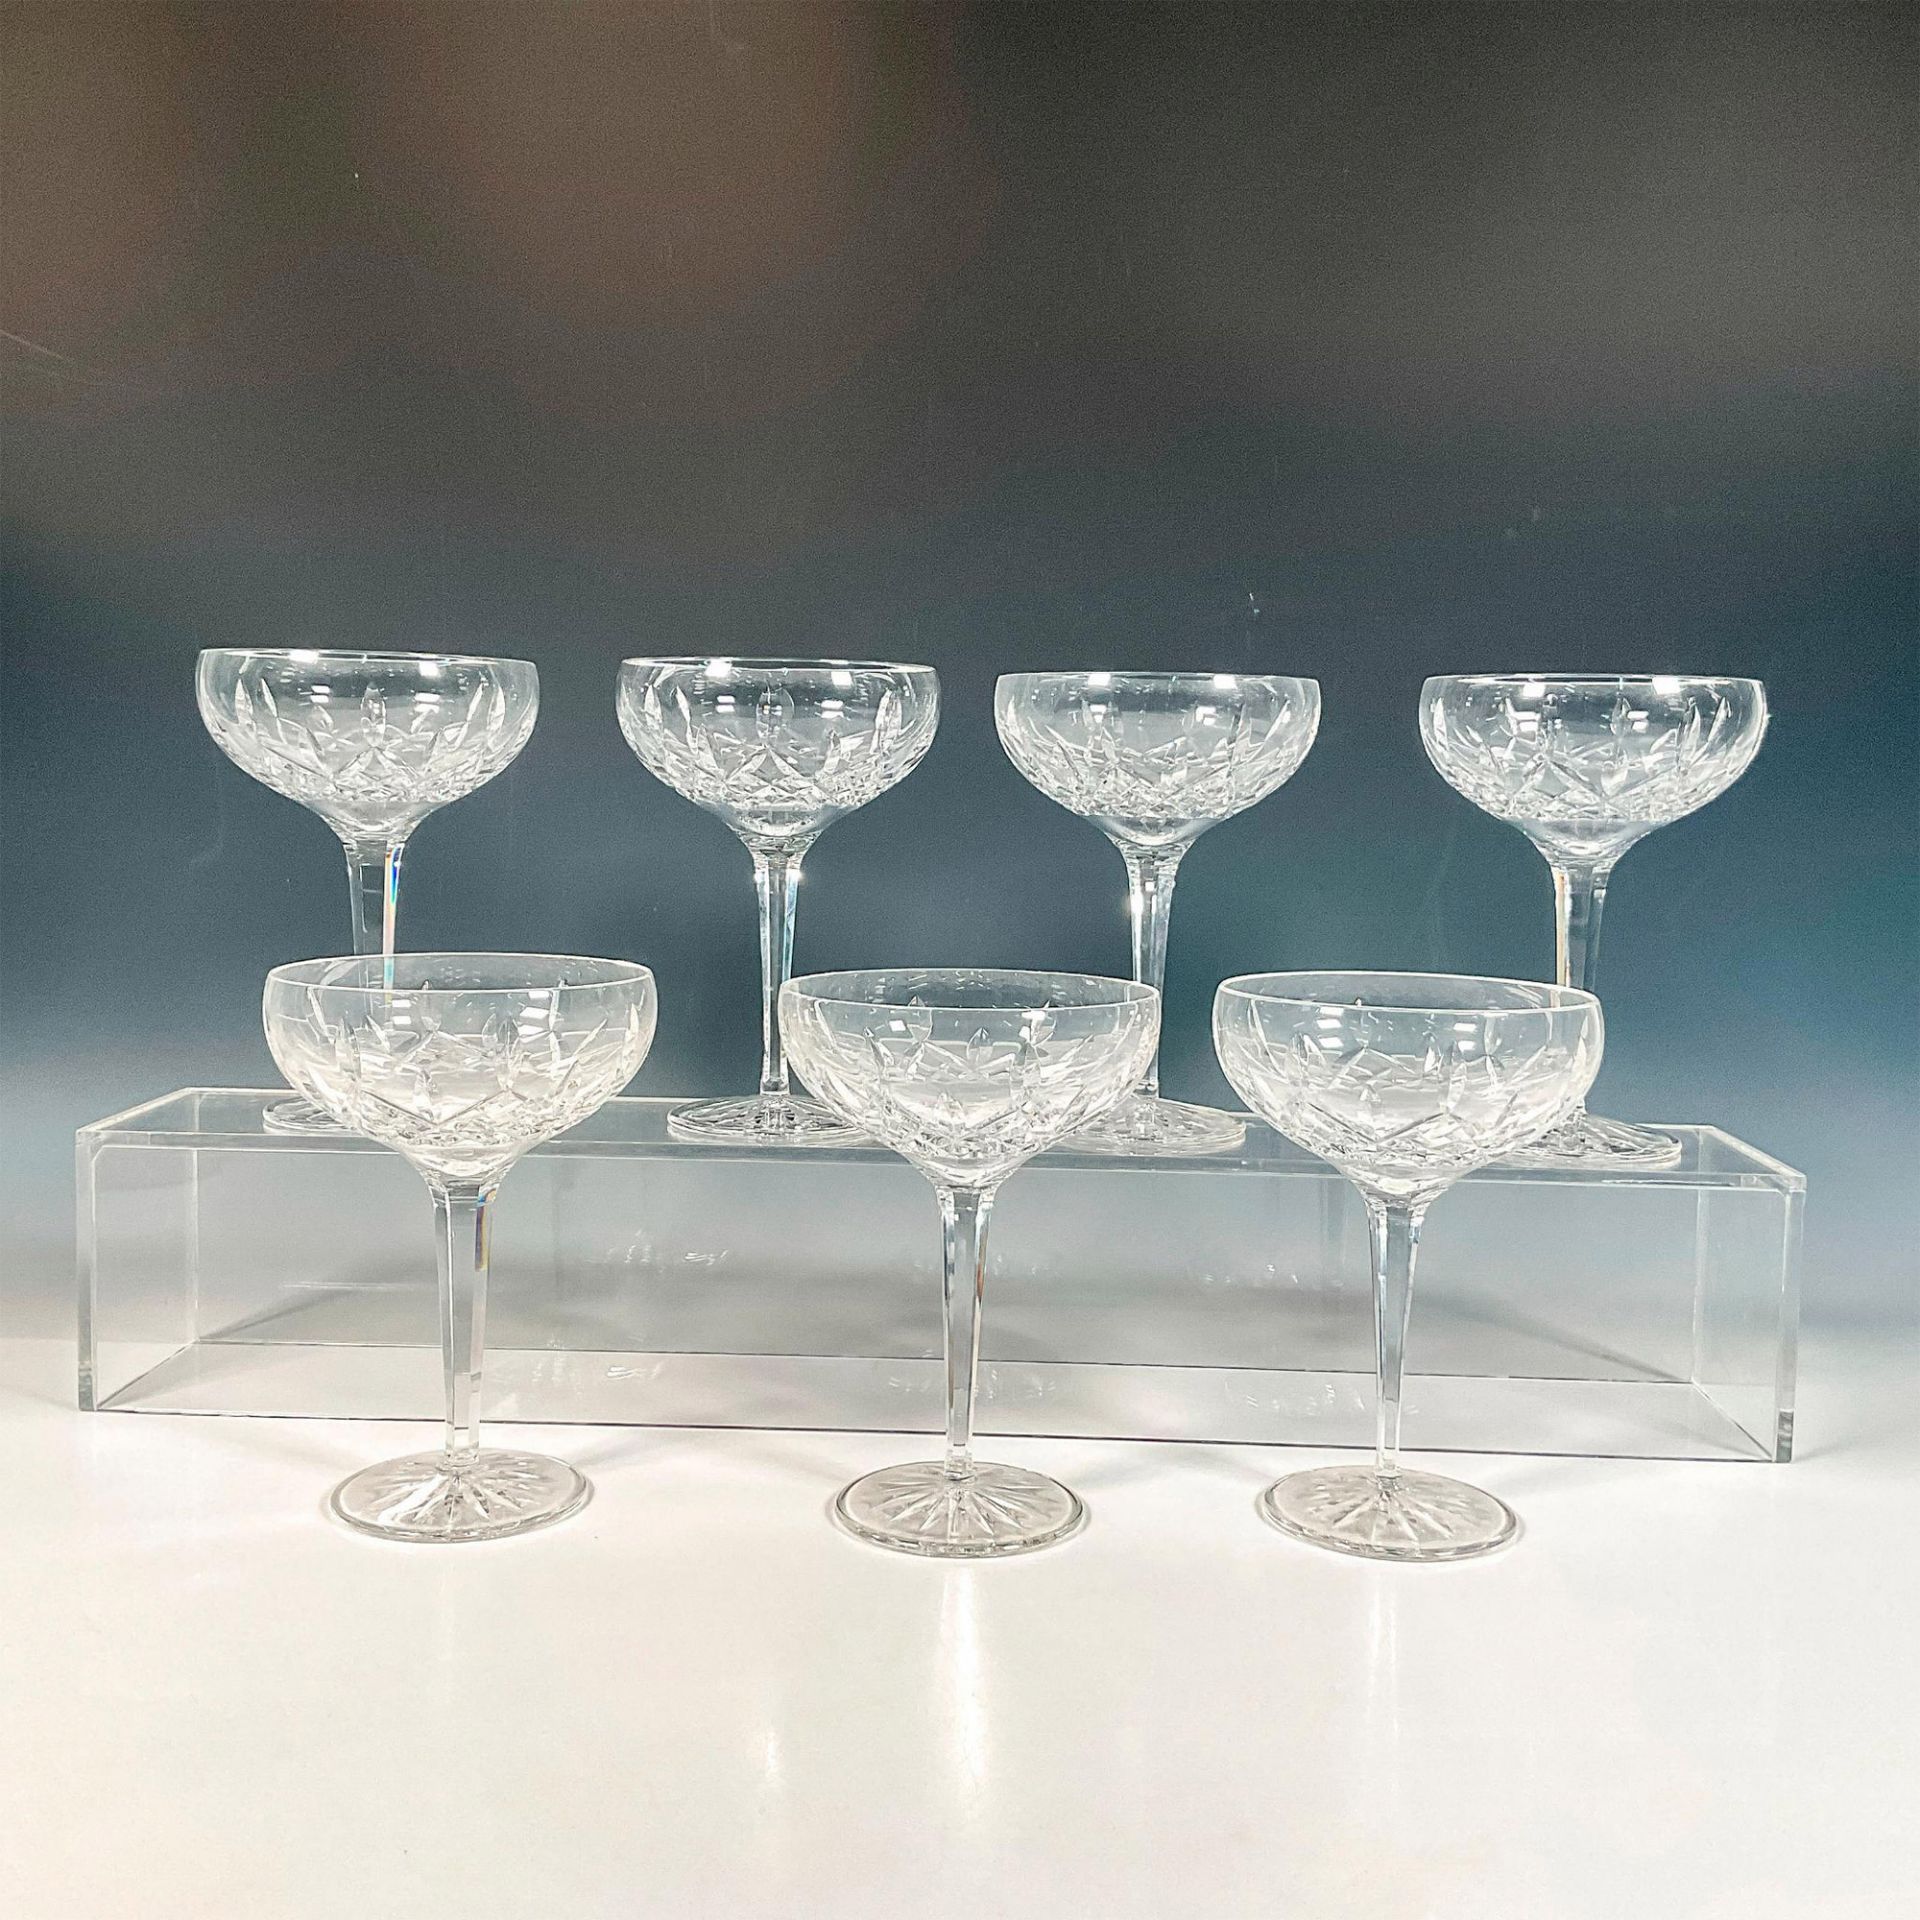 7pc Waterford Crystal Margarita Glasses, Lismore - Image 2 of 3